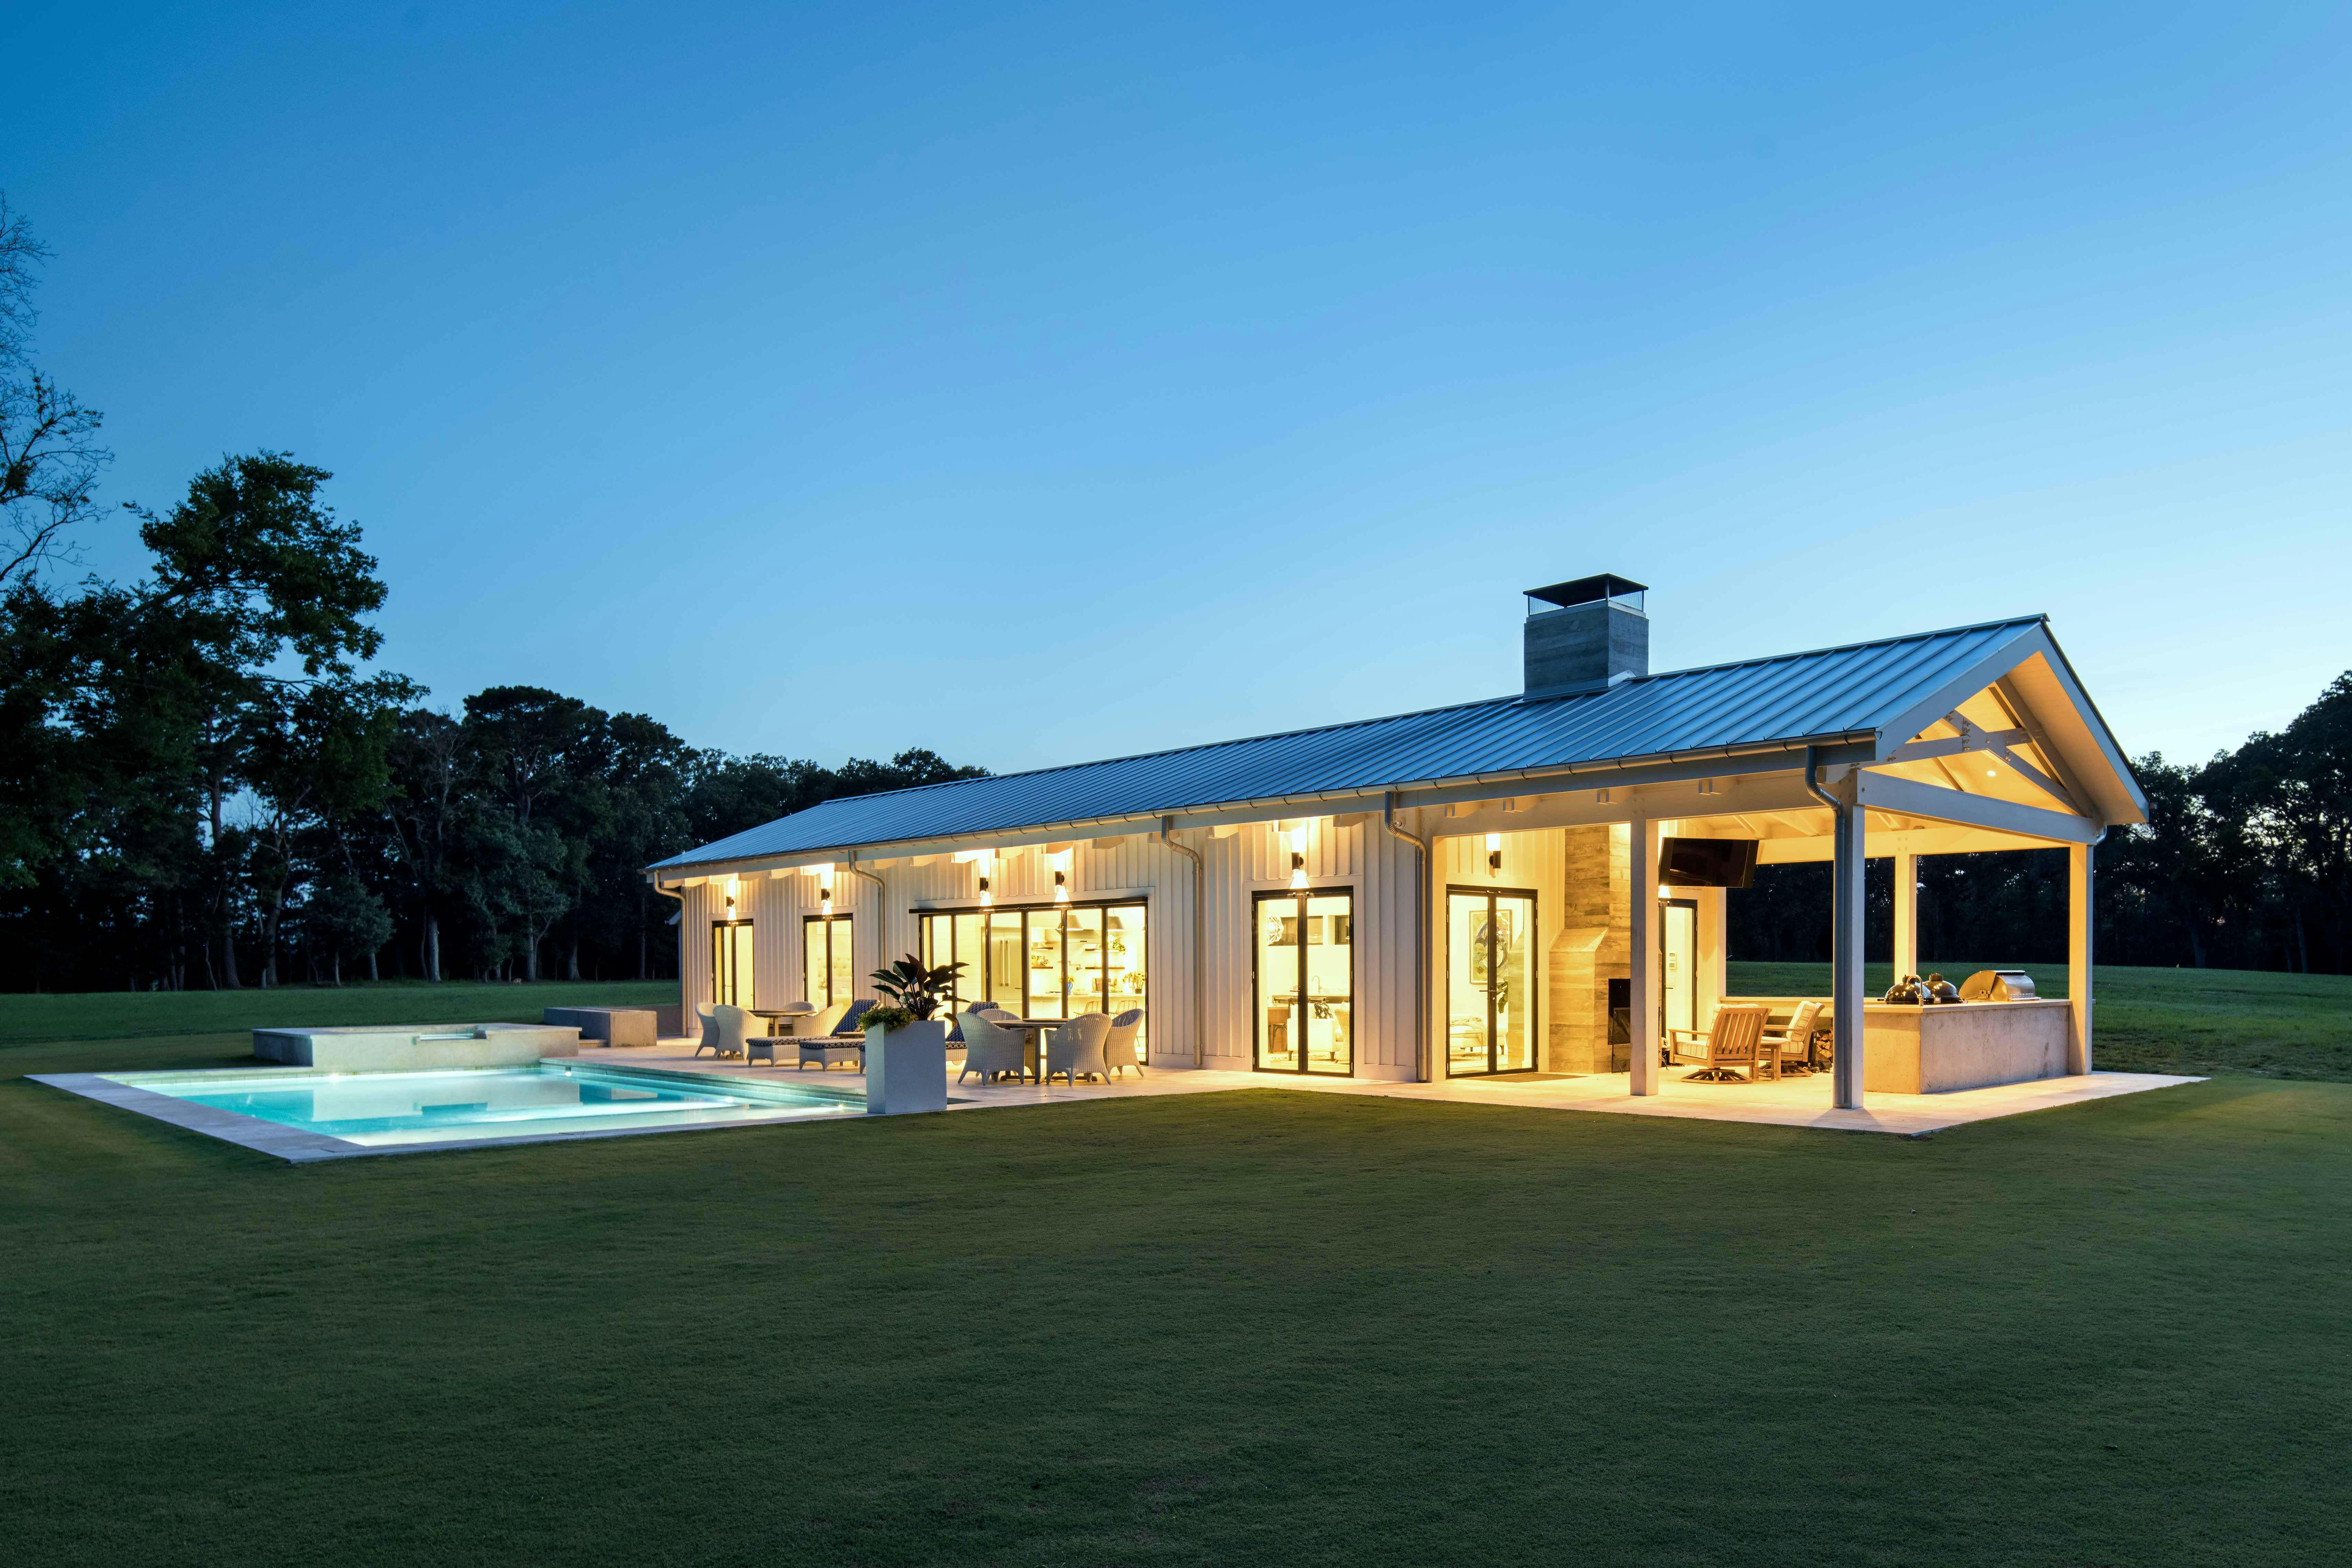 illuminated-pool-house-with-NanaWall-folding-glass-walls